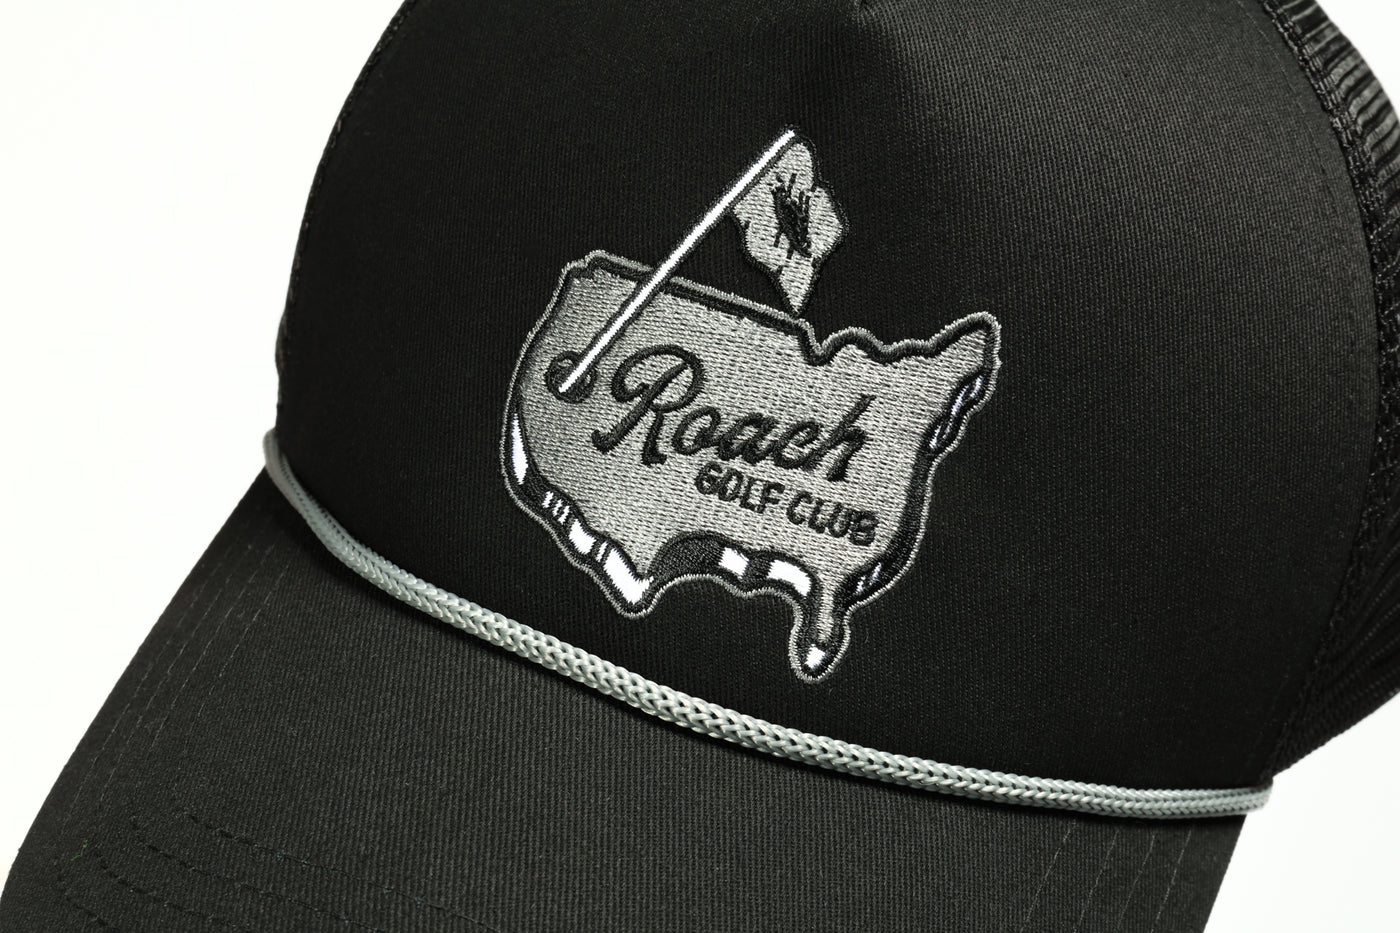 Golf Club Trucker Hat With Grey Rope (Black)